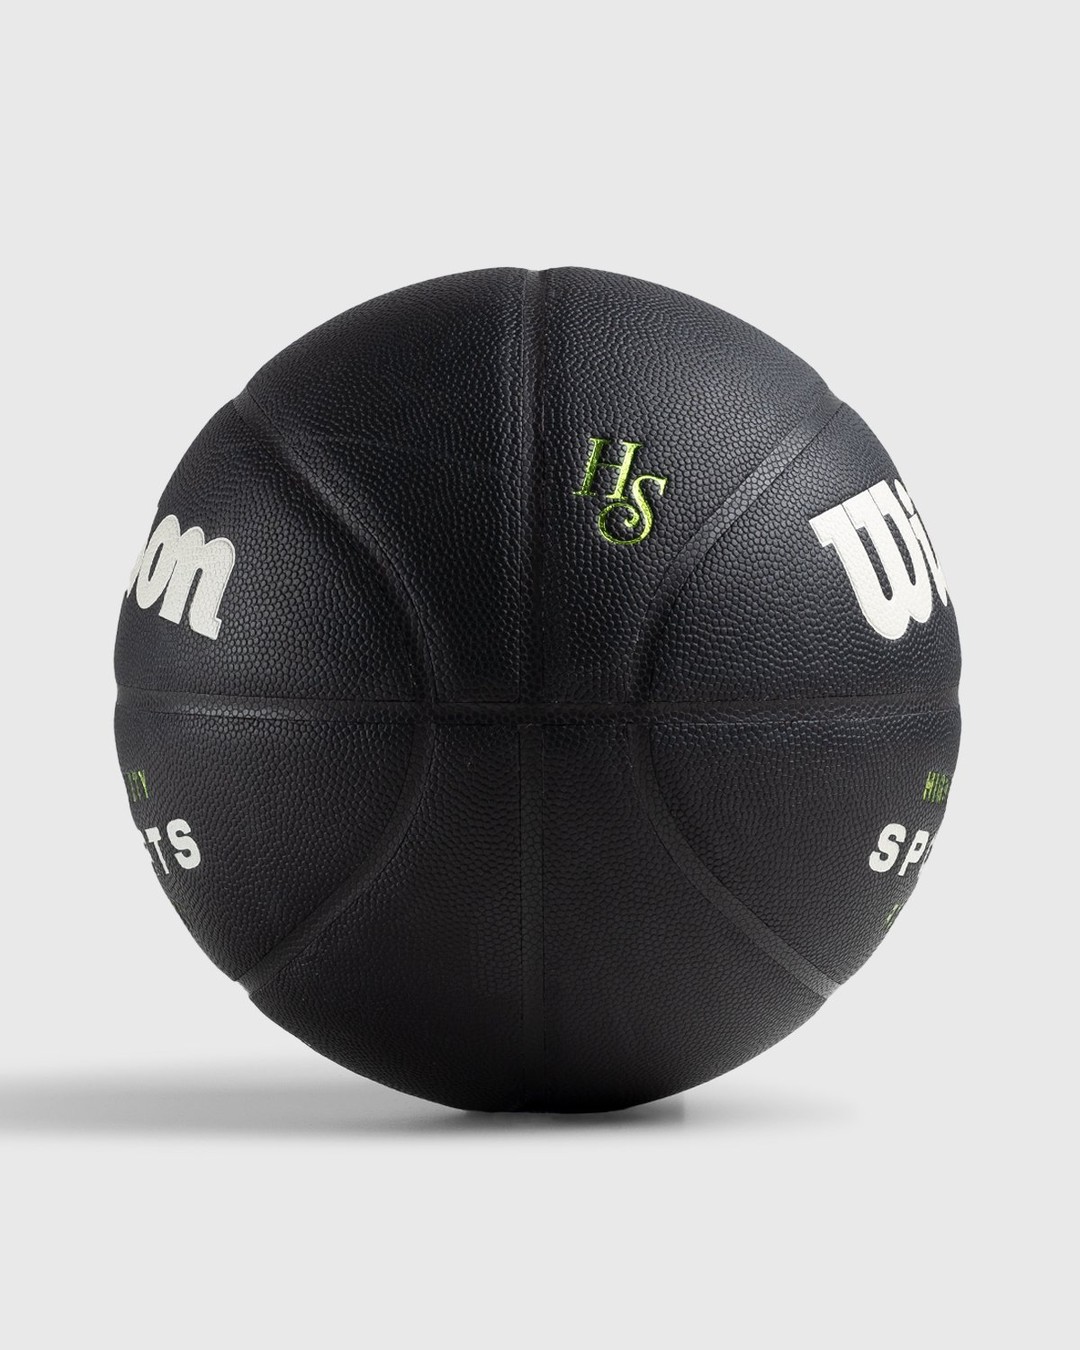 Wilson x Highsnobiety – HS Sports Basketball Black - Lifestyle - Black - Image 2